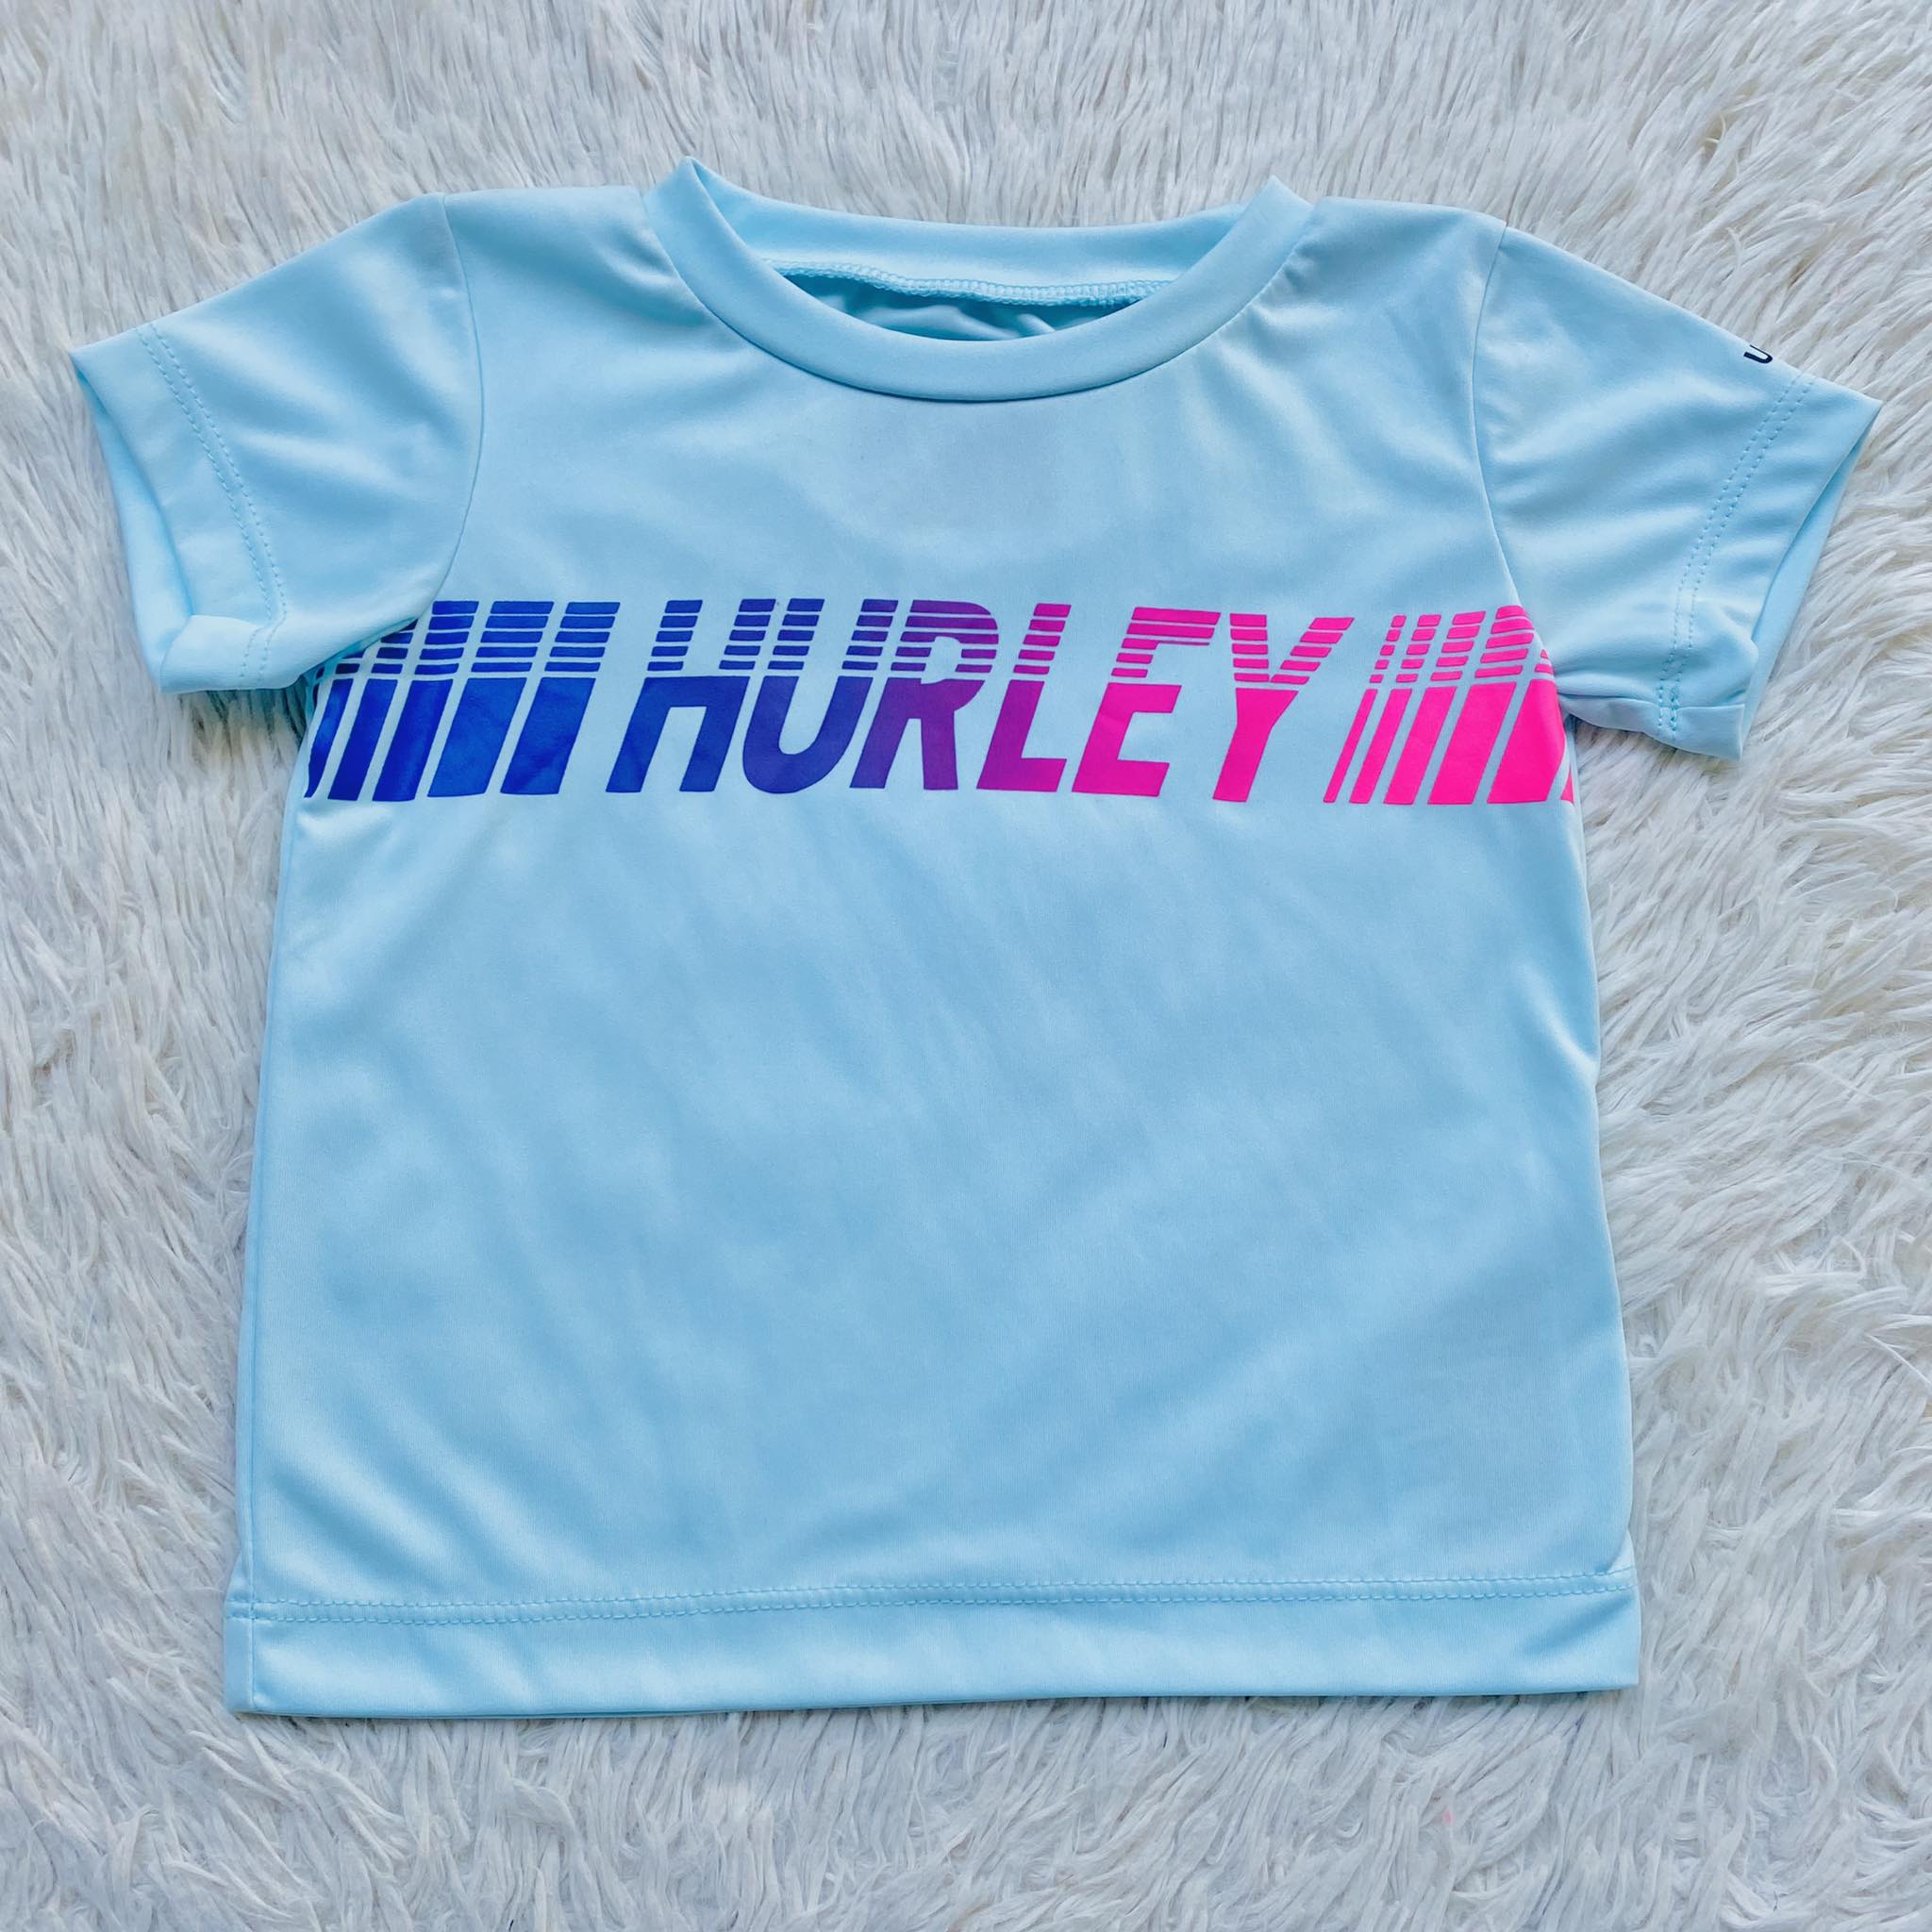 Hurley 92271